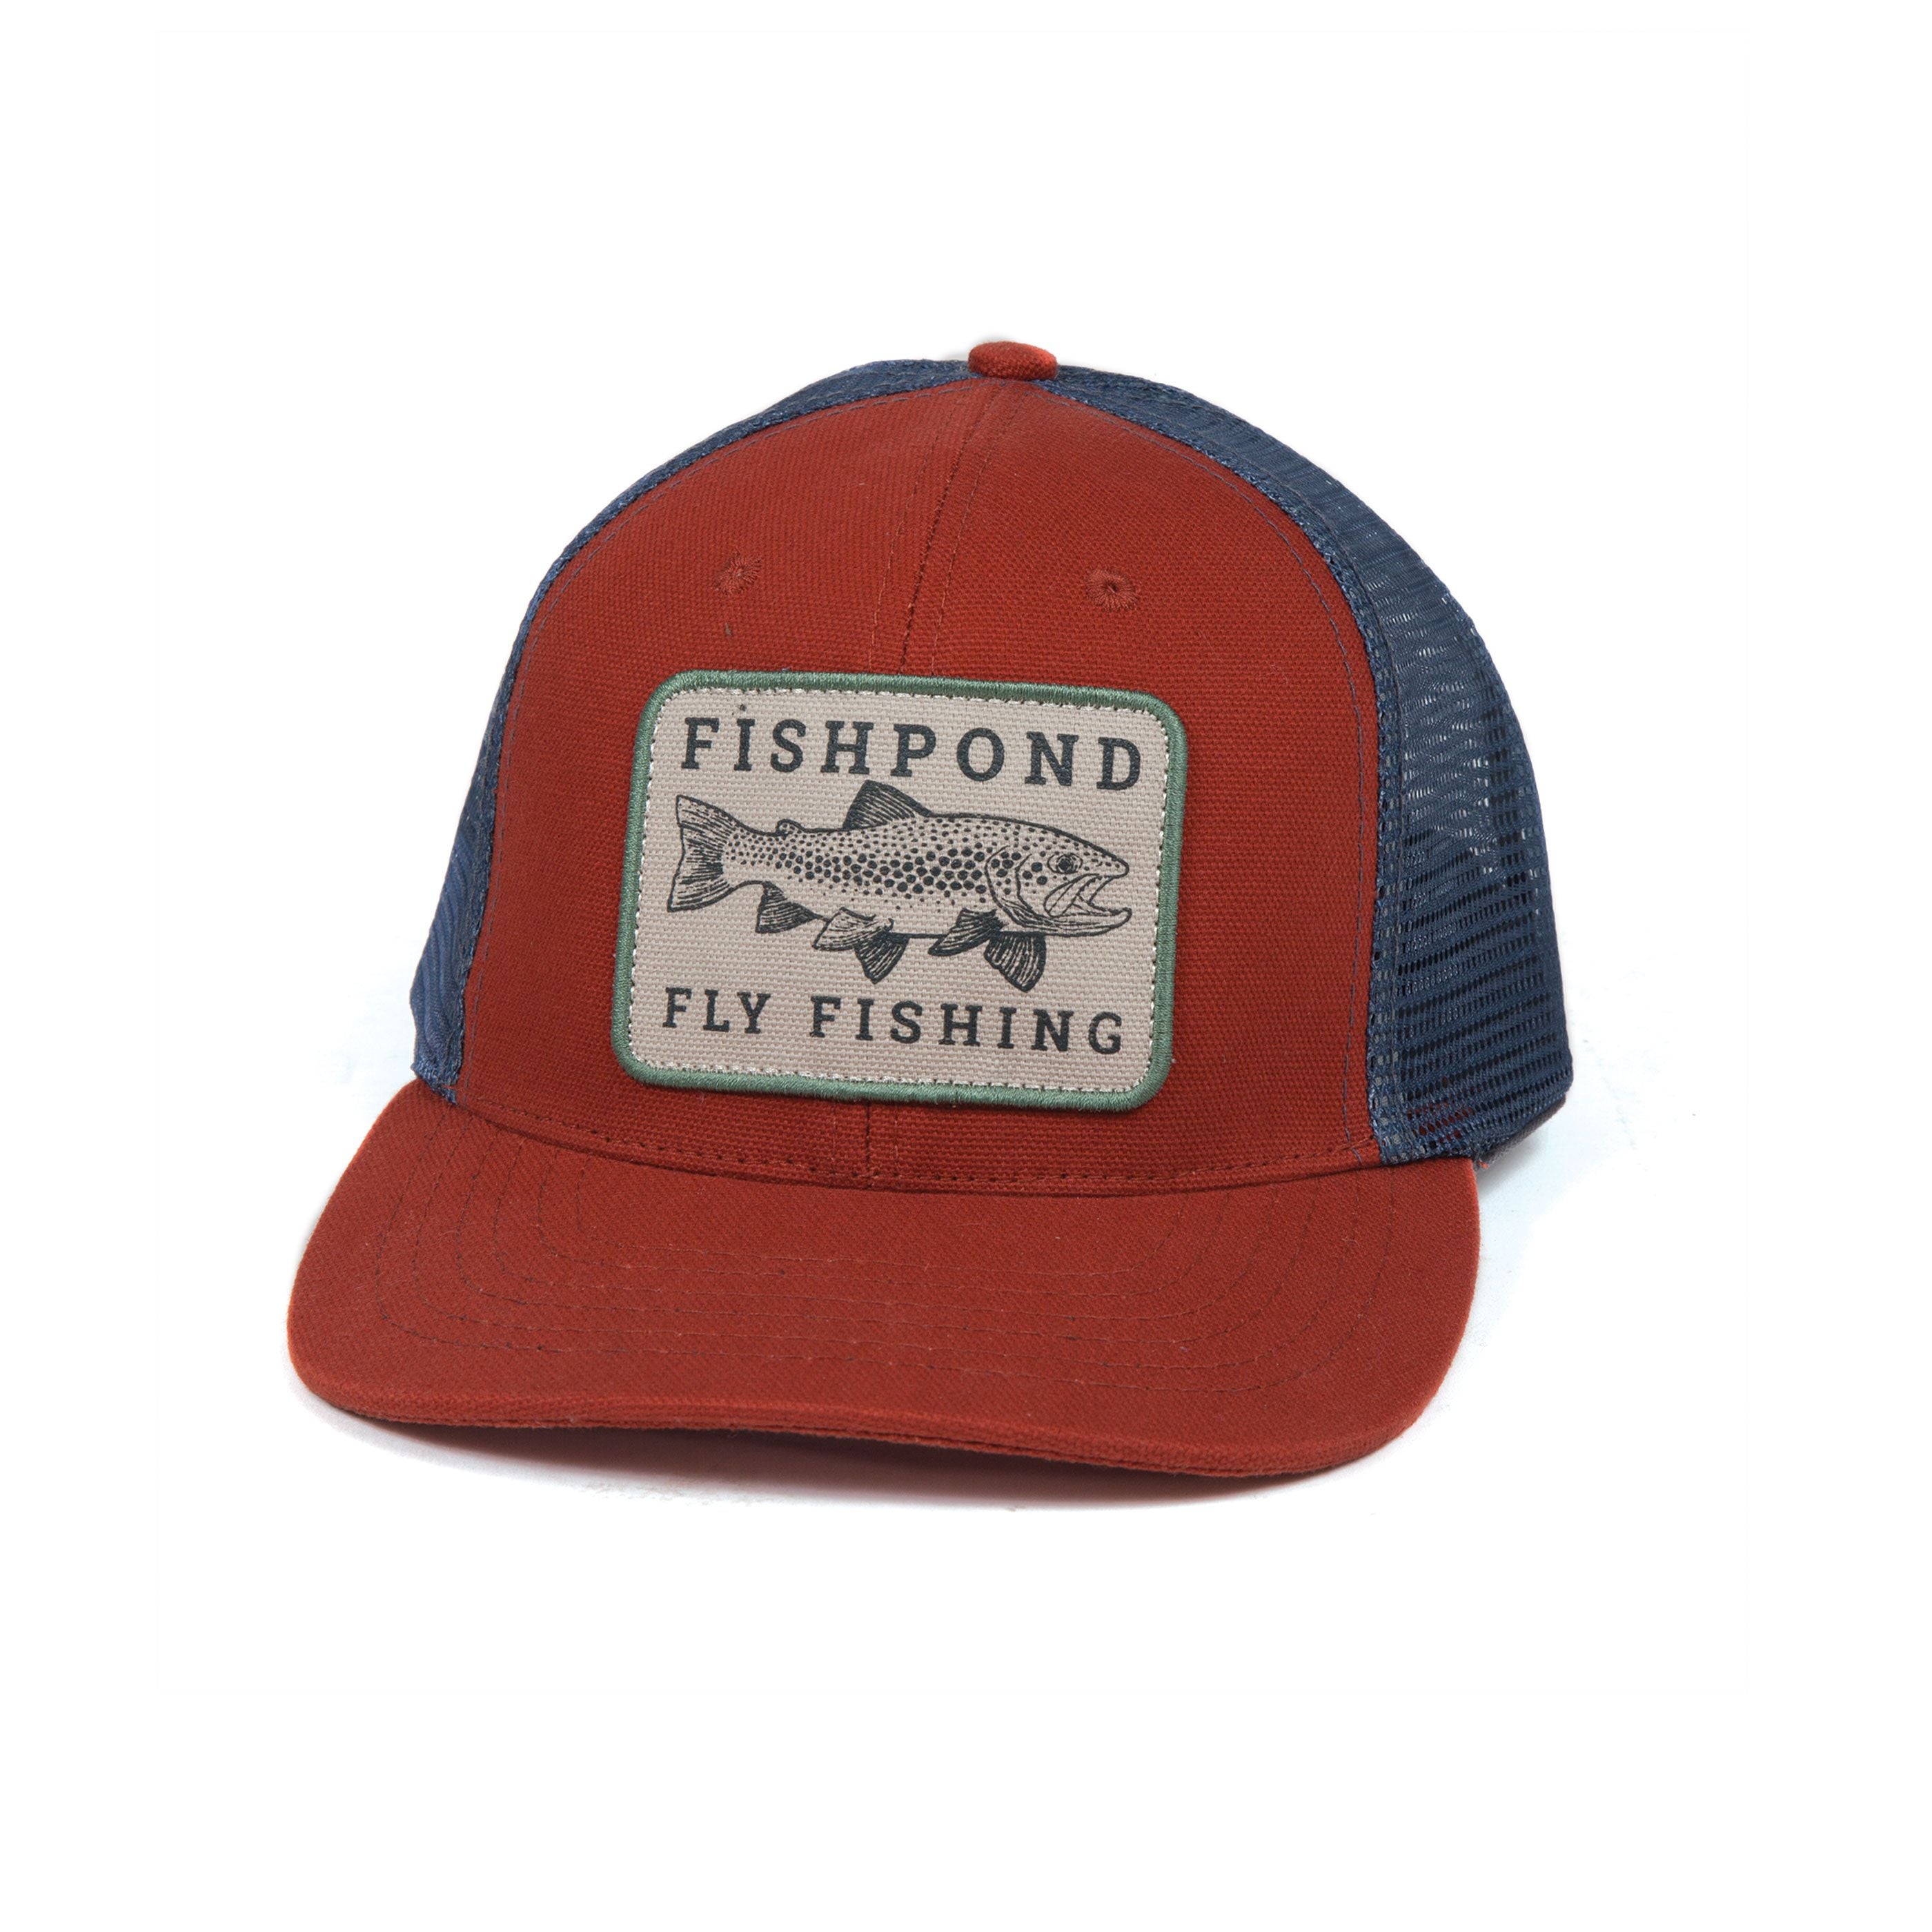 Fishpond / Las Pampas Hat